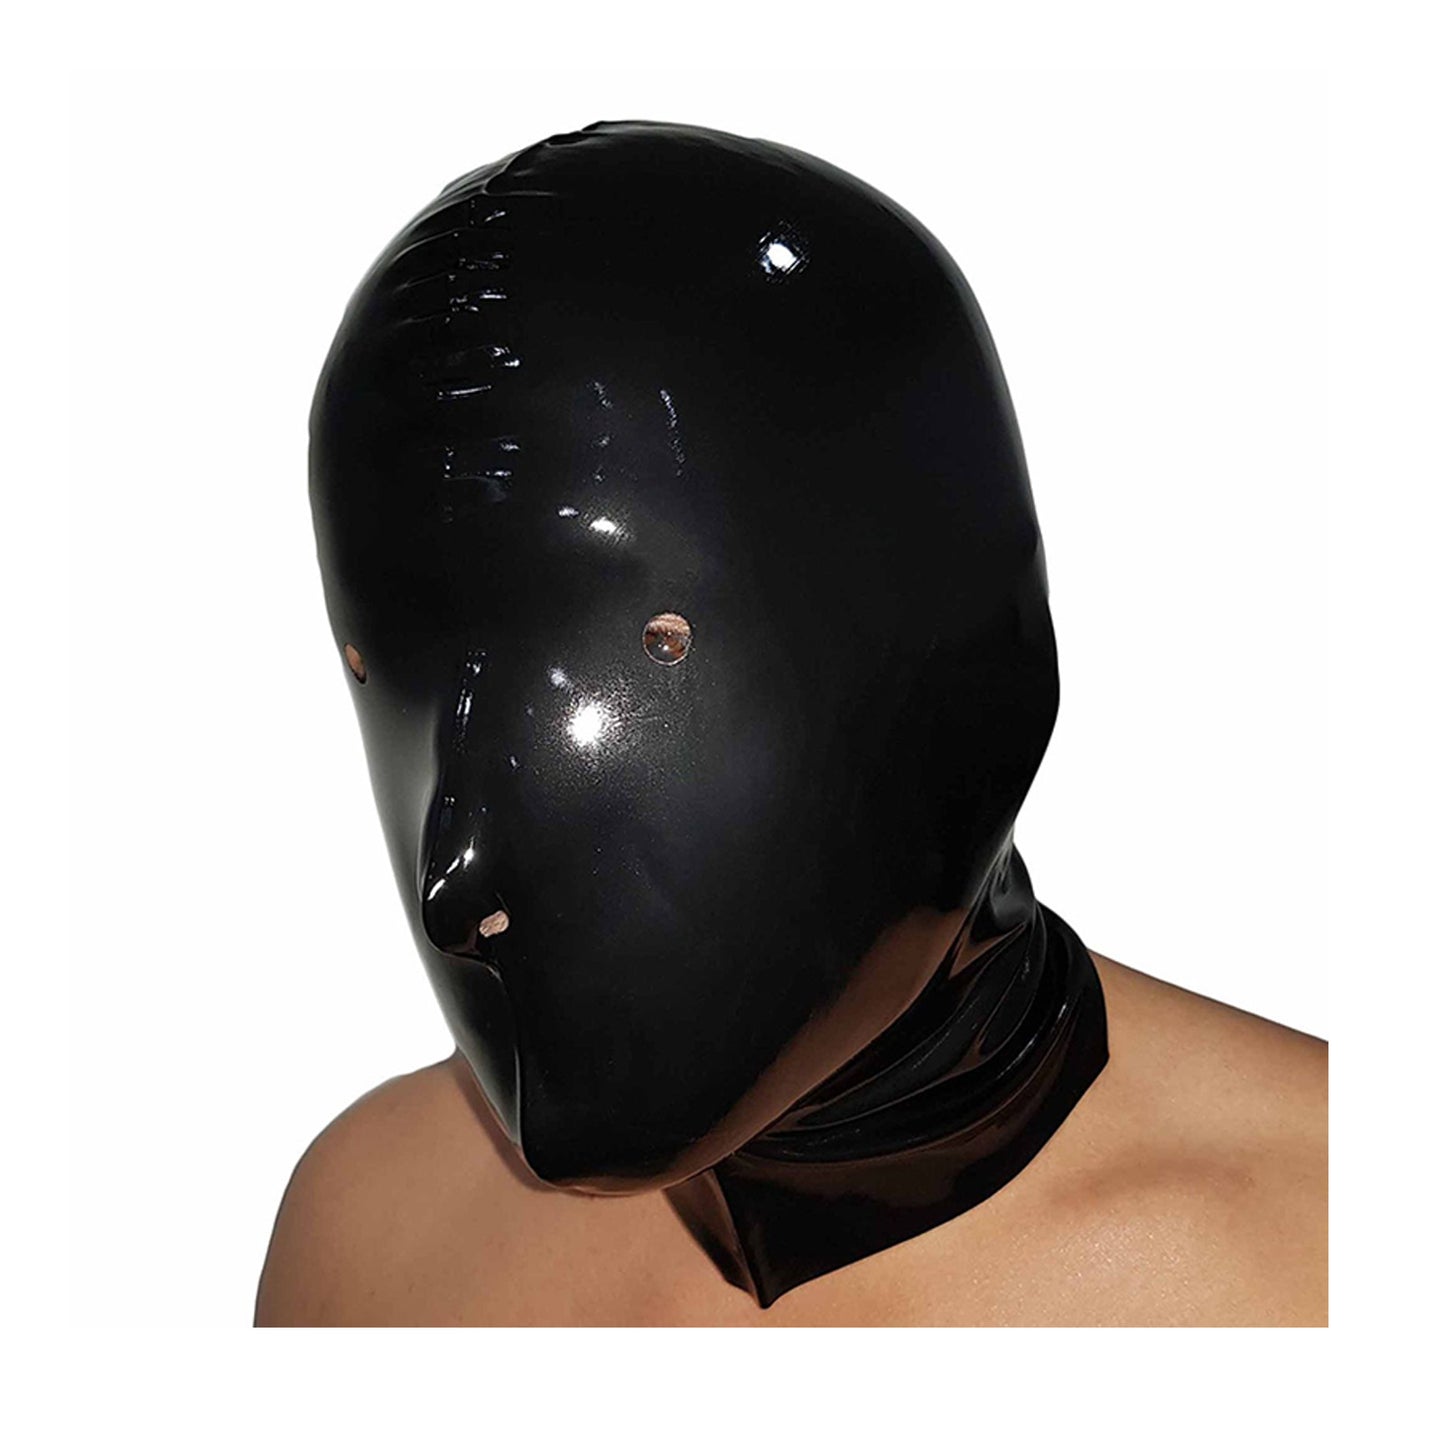 MONNIK Latex Hood Black Eyes Open Rubber Mask full bondage for Bodysuit Clubwear Cosplay Party